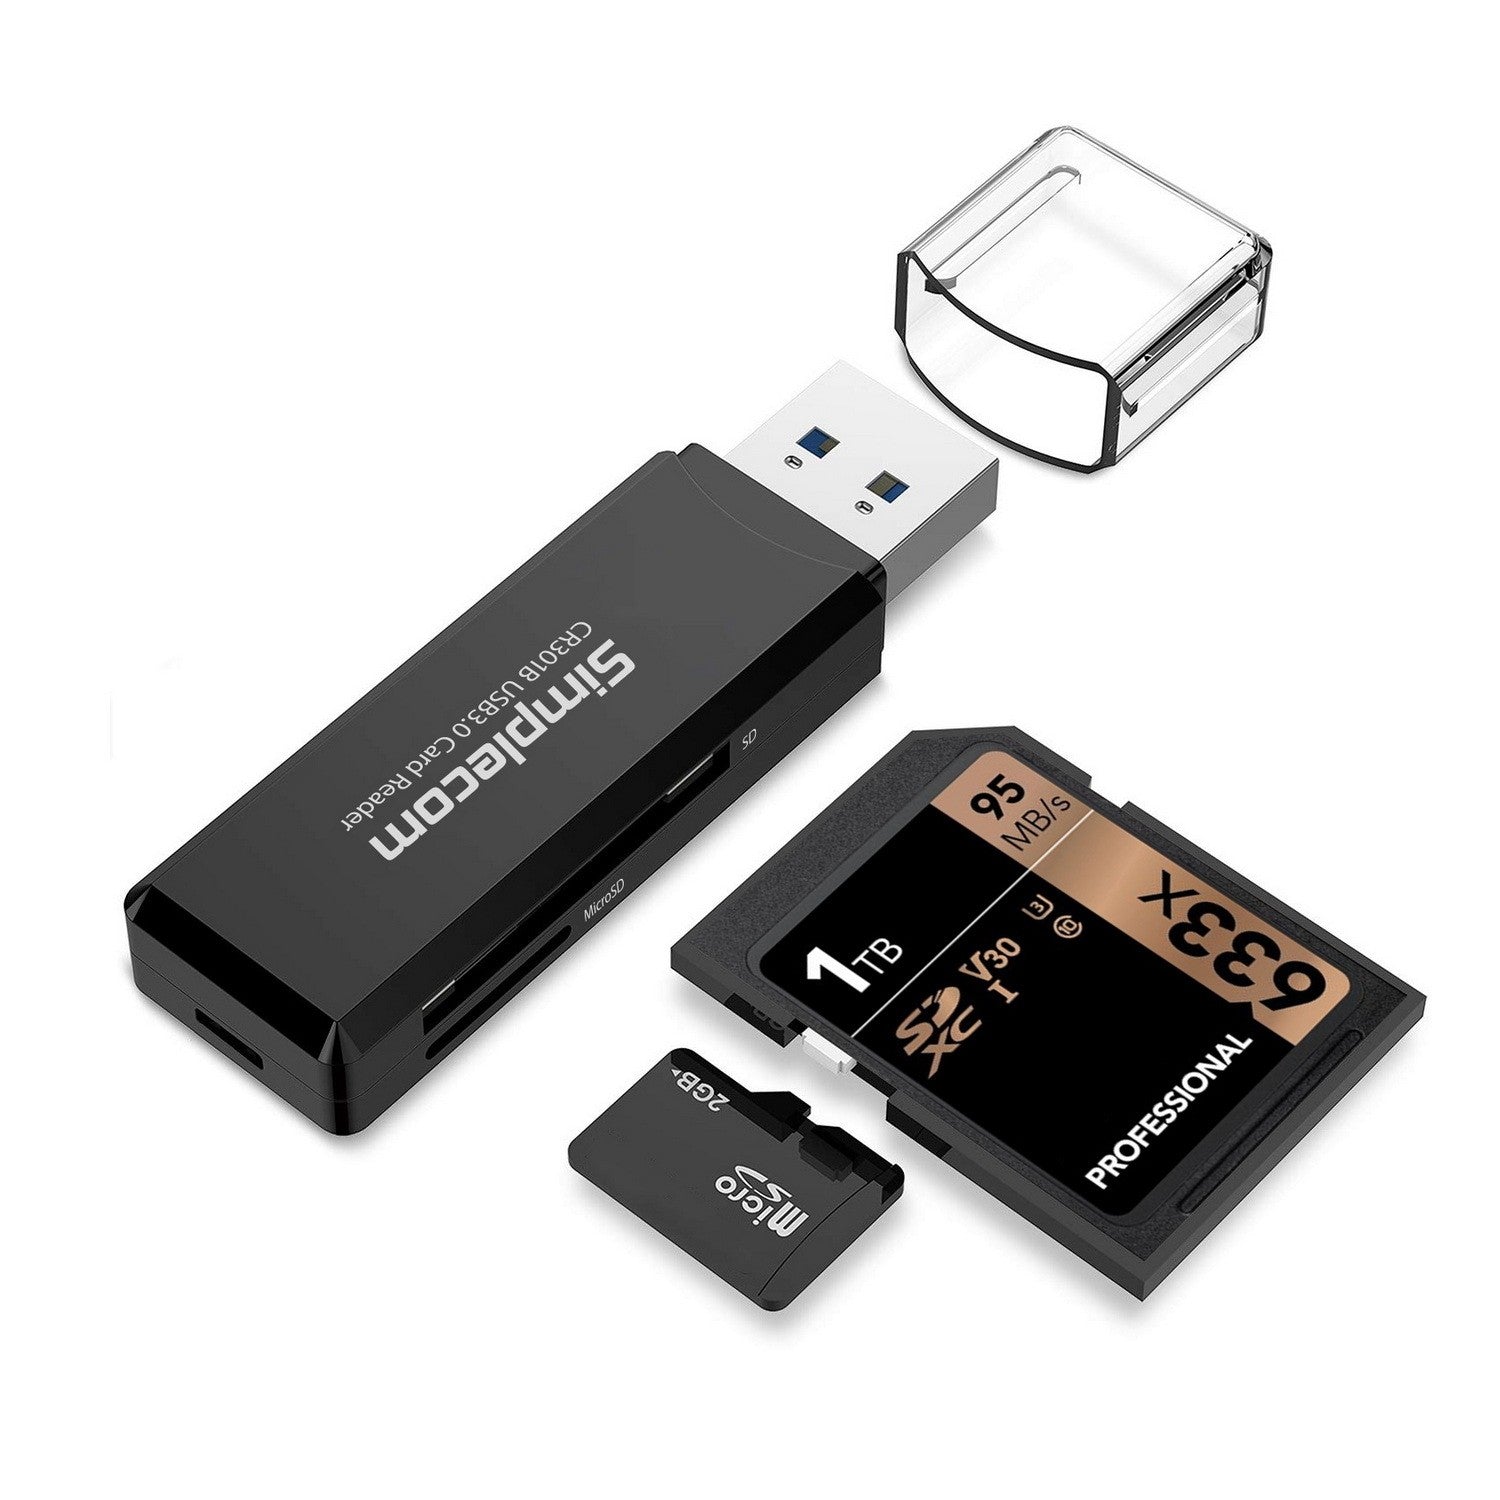 Simplecom 2 Slot SuperSpeed USB 3.0 Card Reader